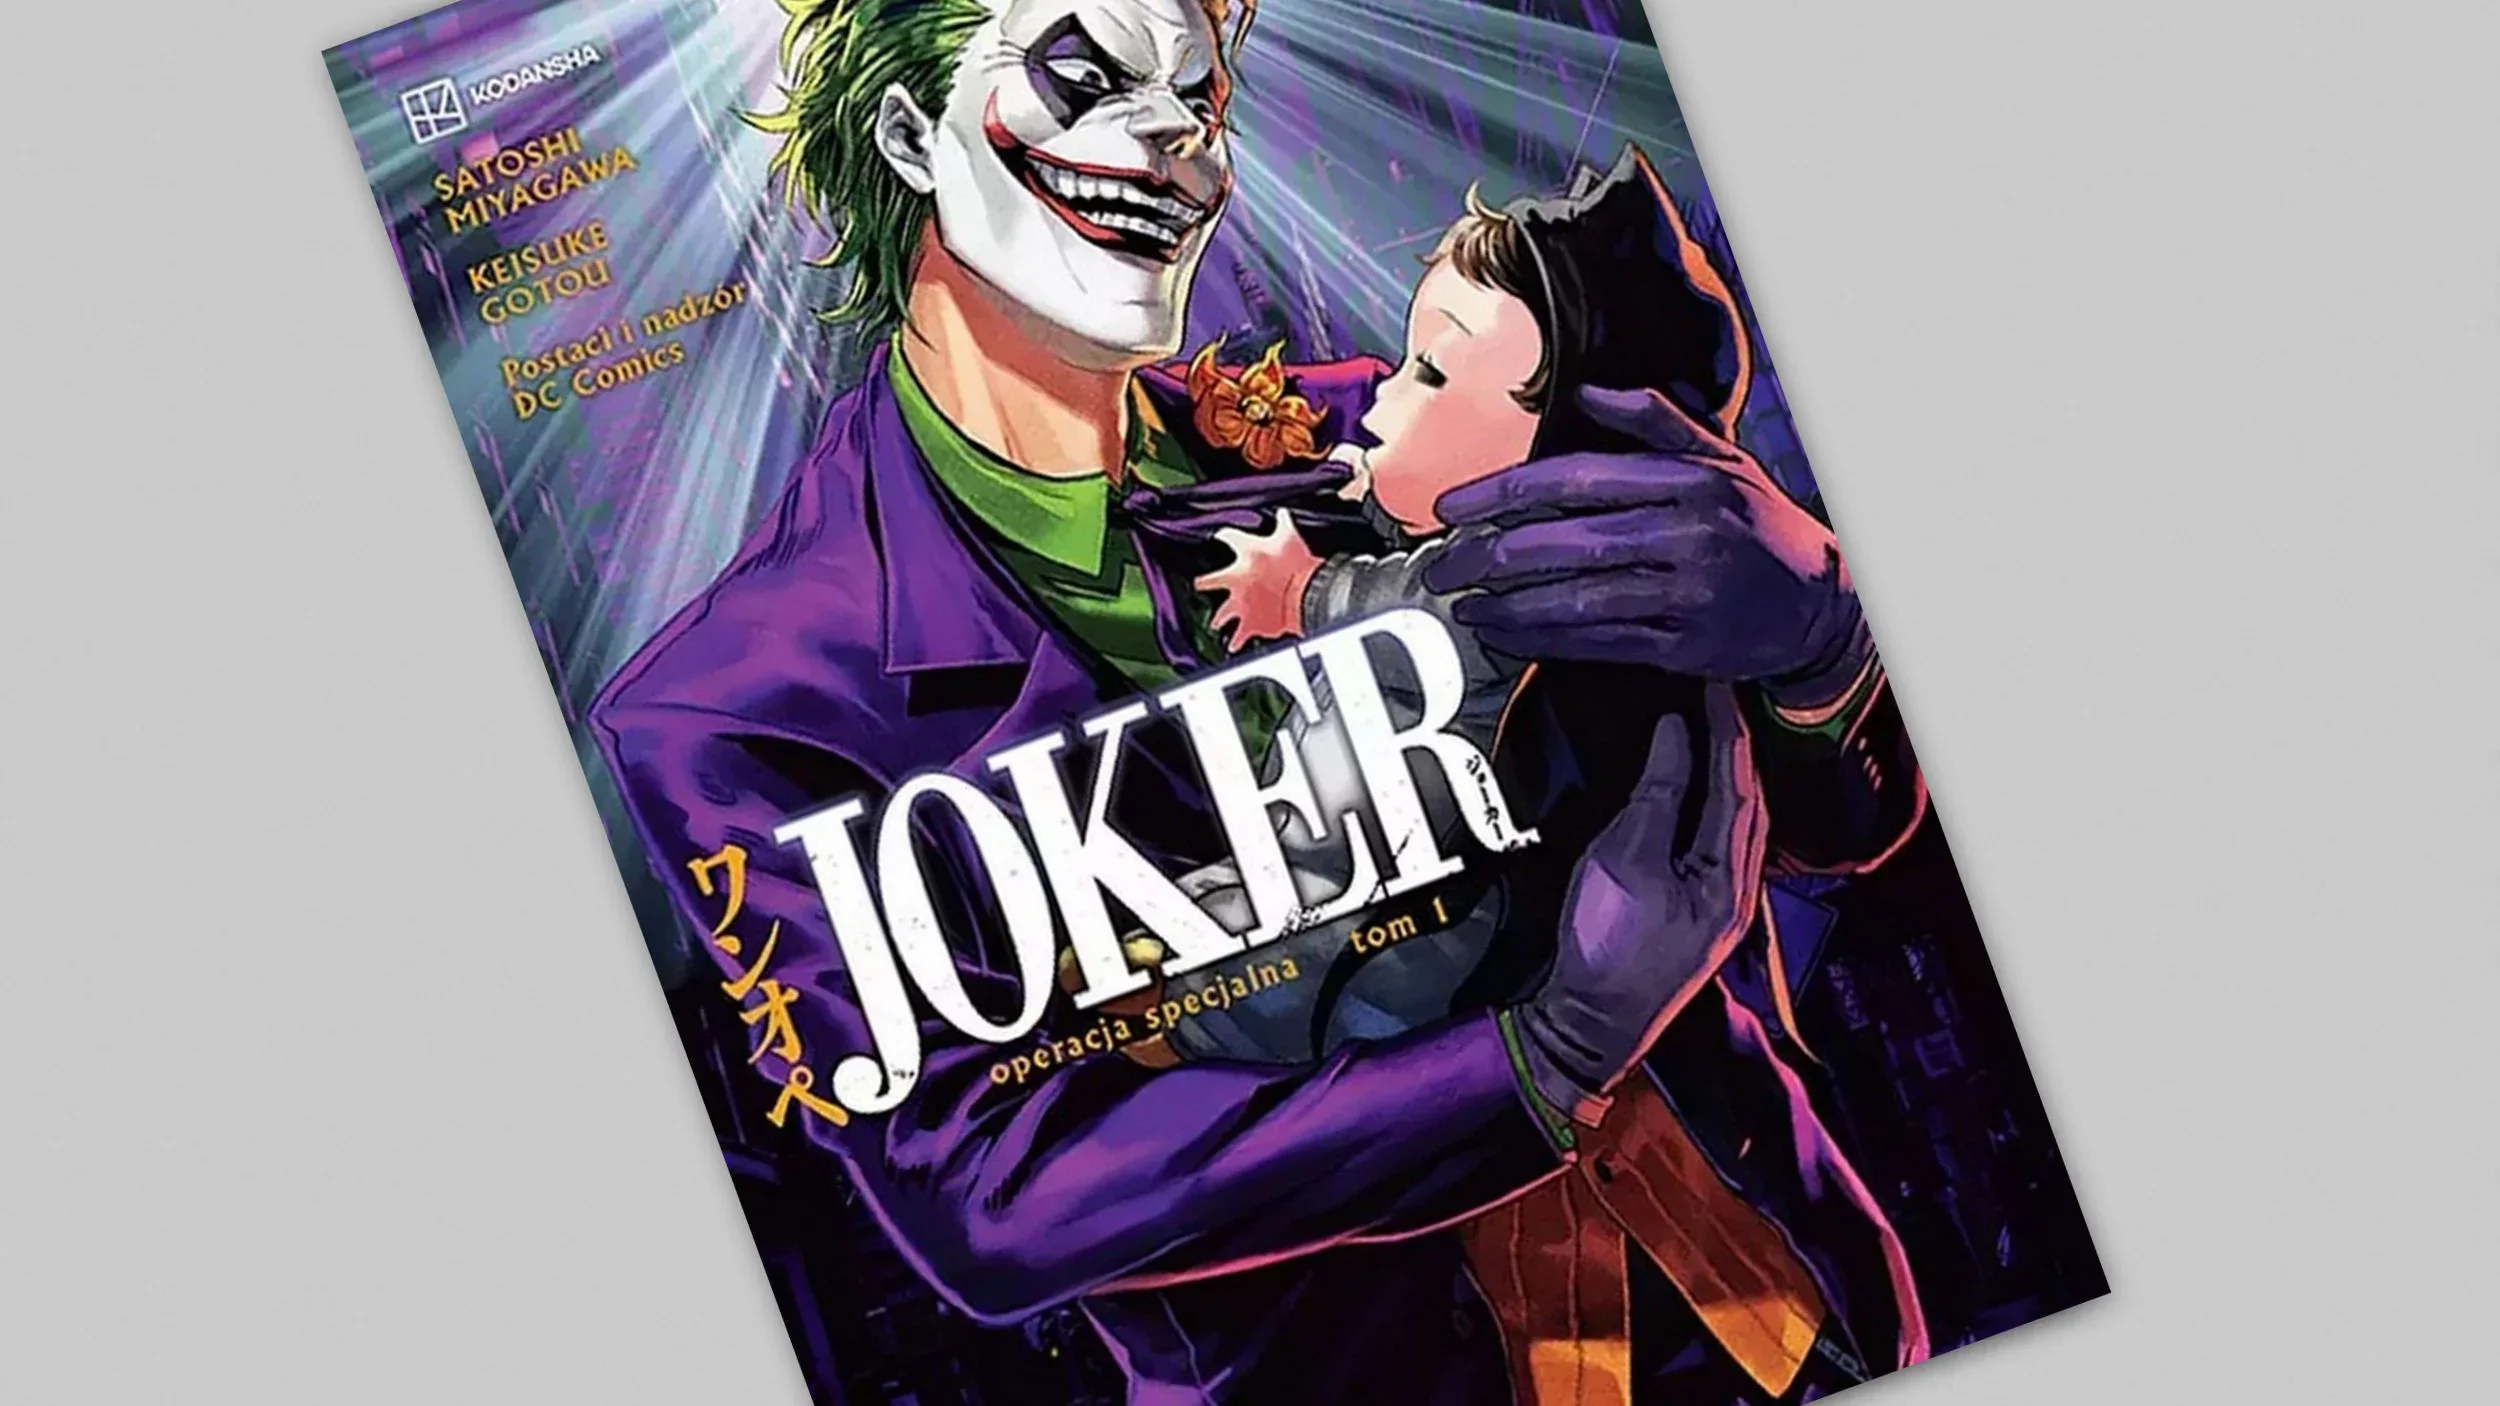 Joker - Operacja specjalna tom 1 - recenzja komiksu